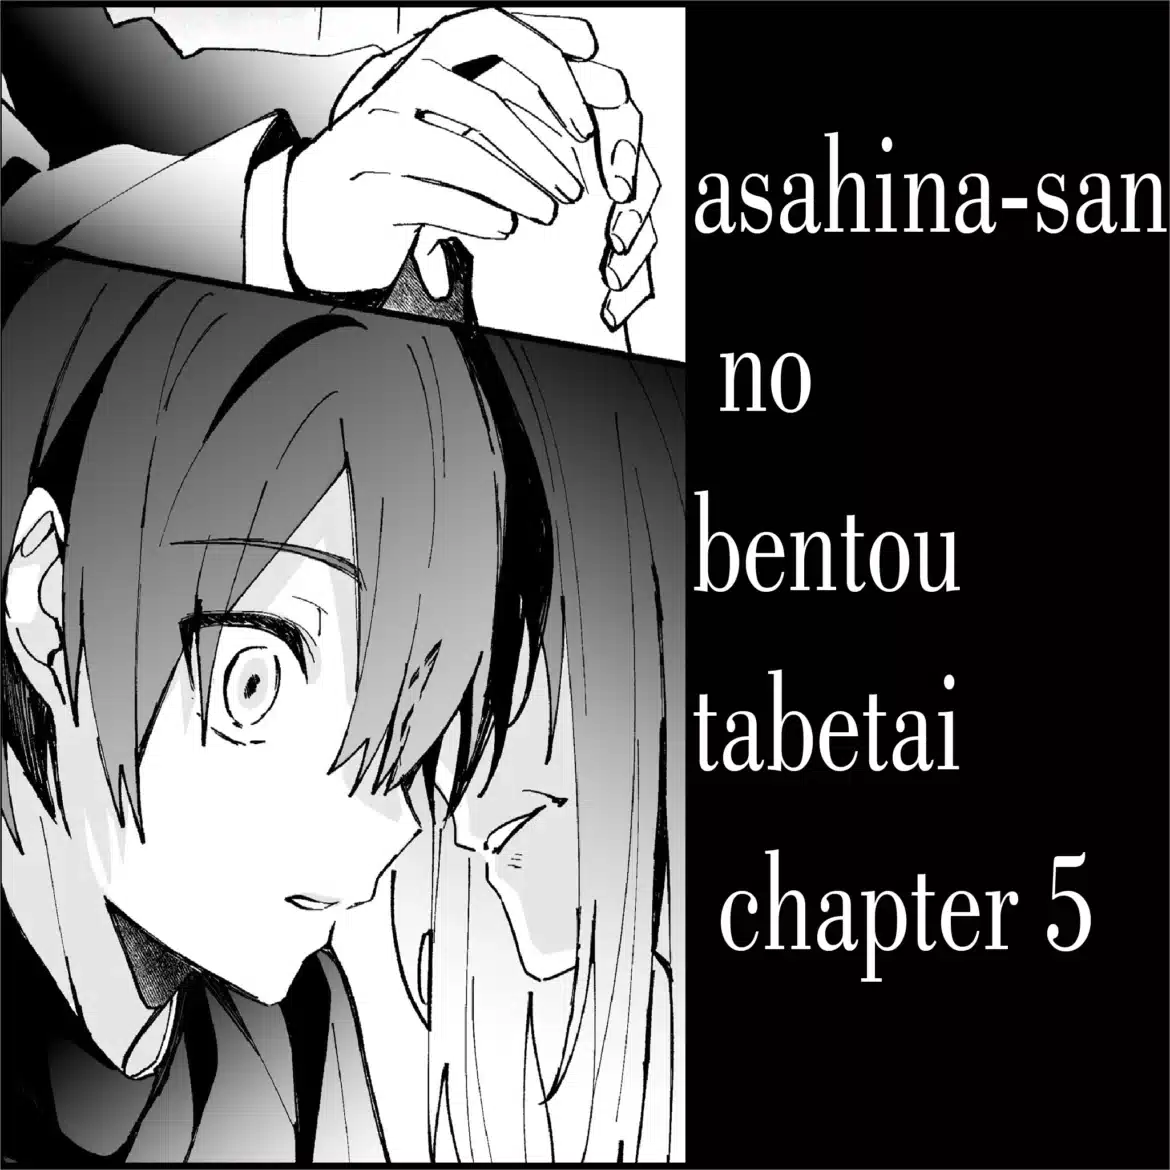 Seinen Genres of Asahina-San No Bentou Tabetai Chapter 5